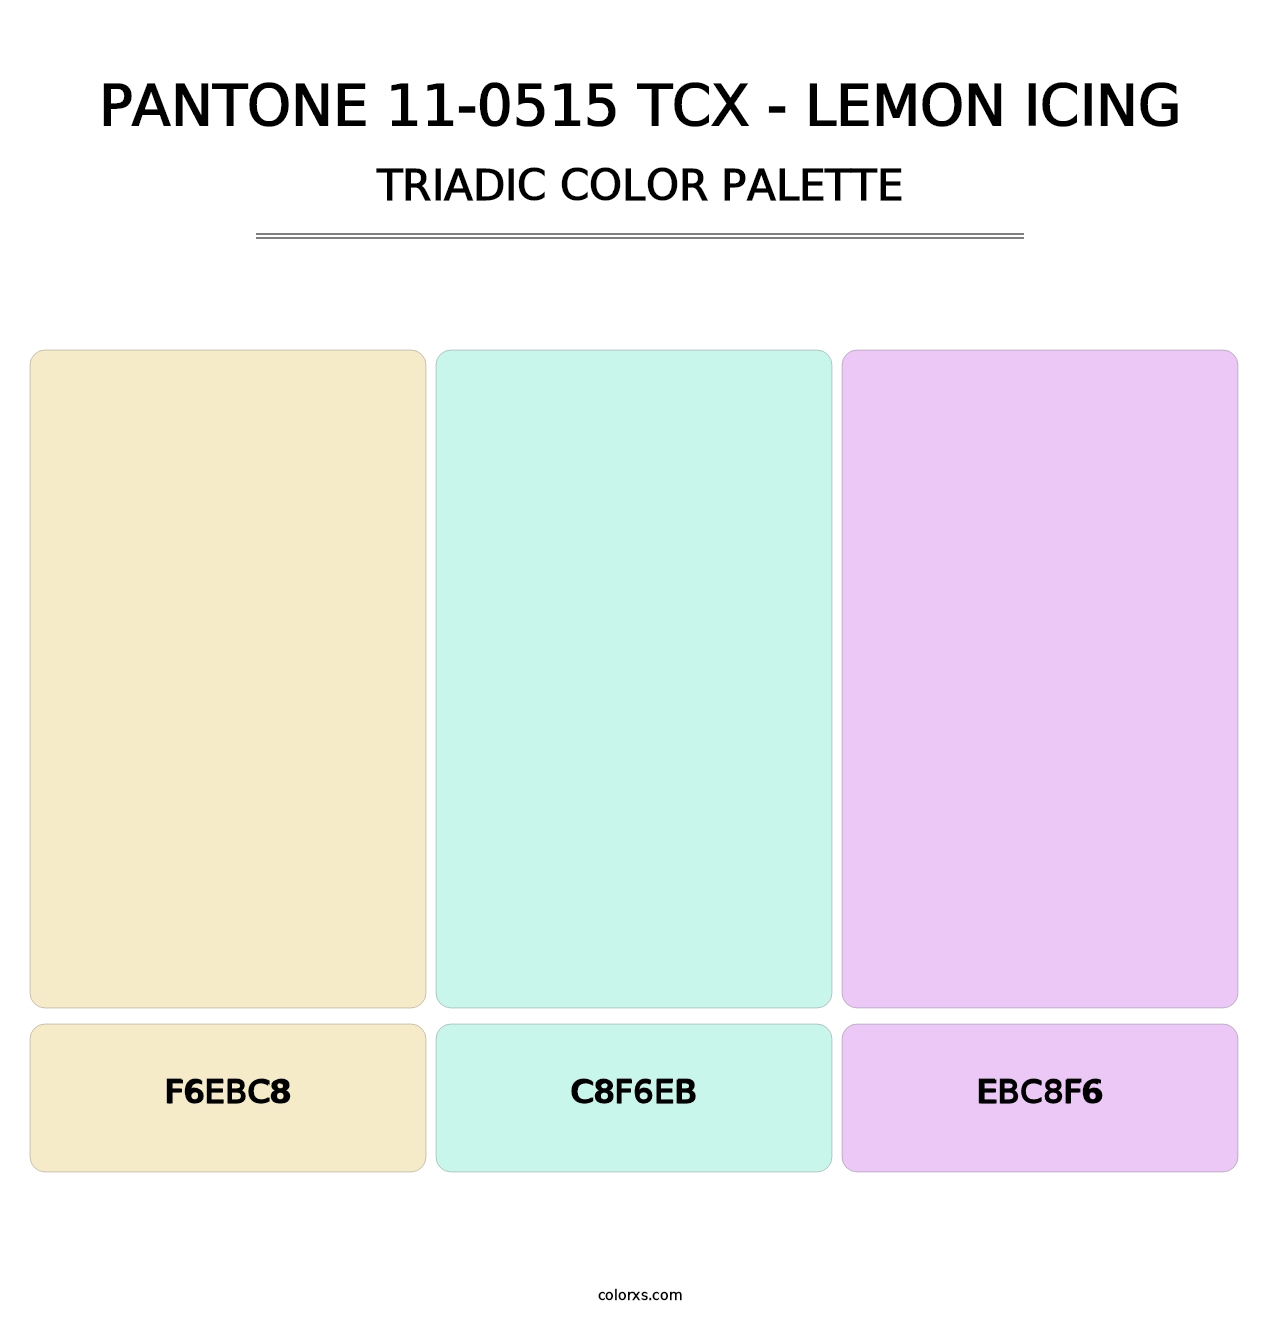 PANTONE 11-0515 TCX - Lemon Icing - Triadic Color Palette